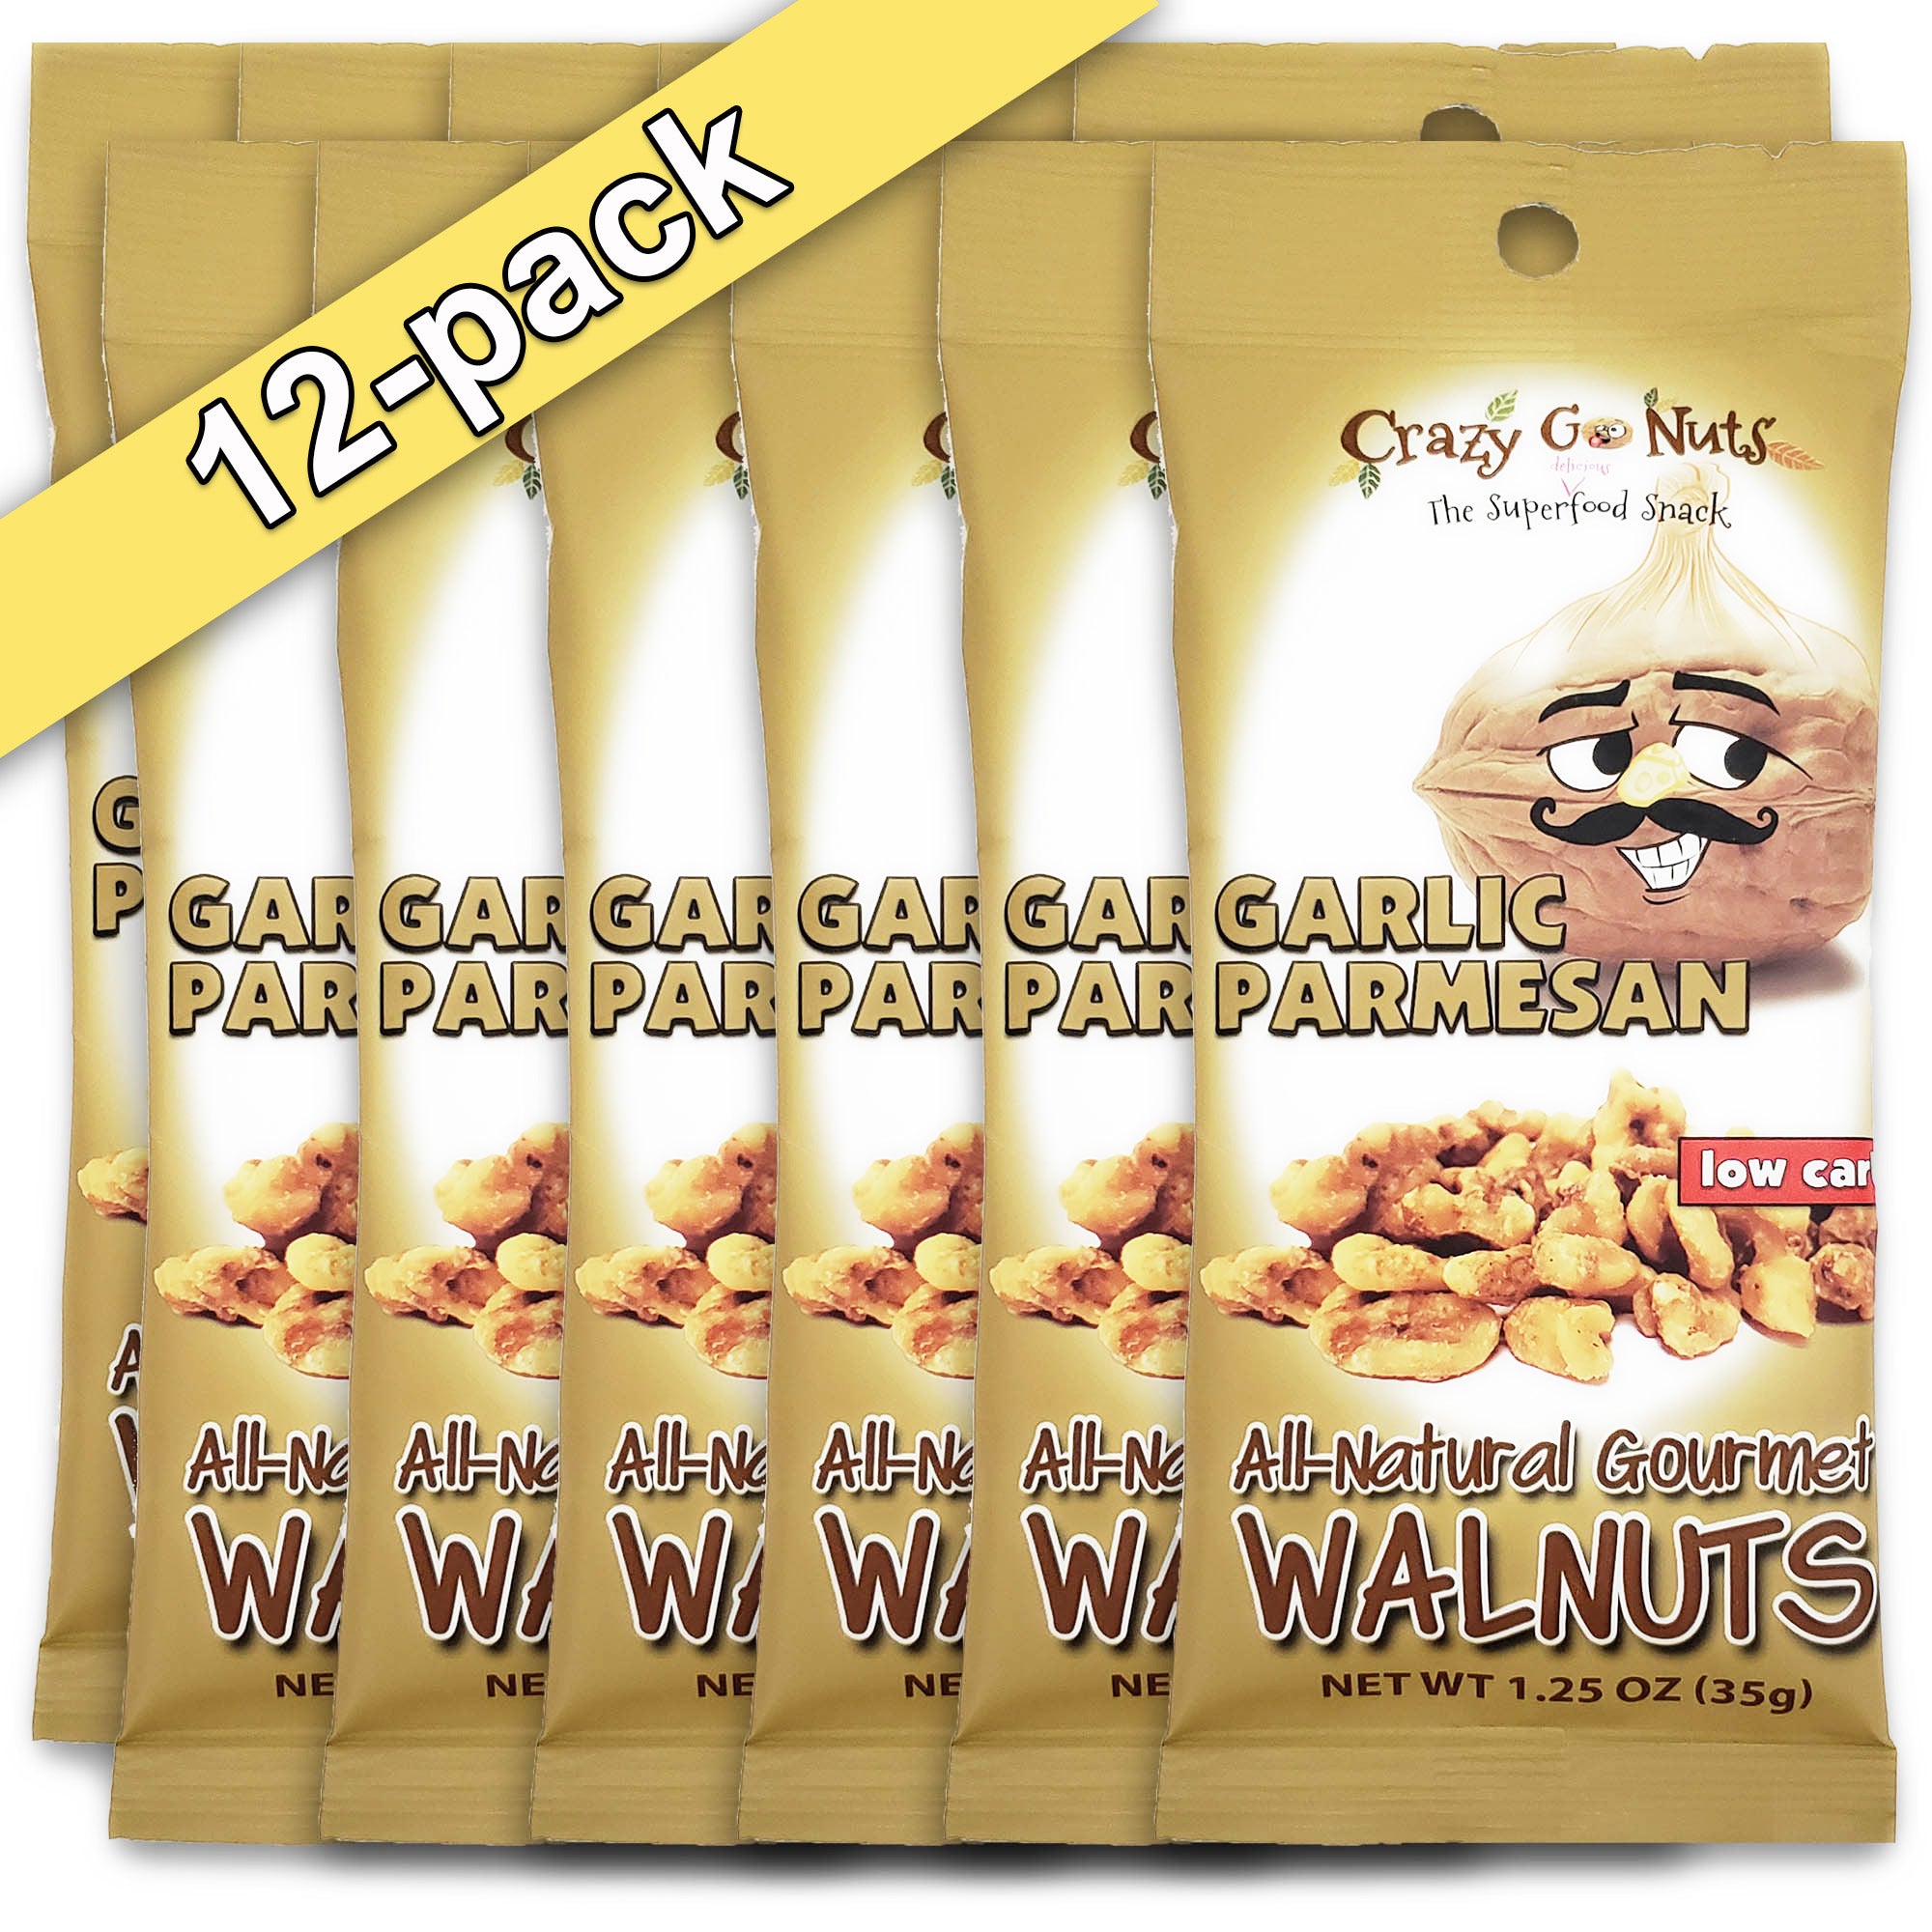 12 bags of garlic parmesan walnut snacks